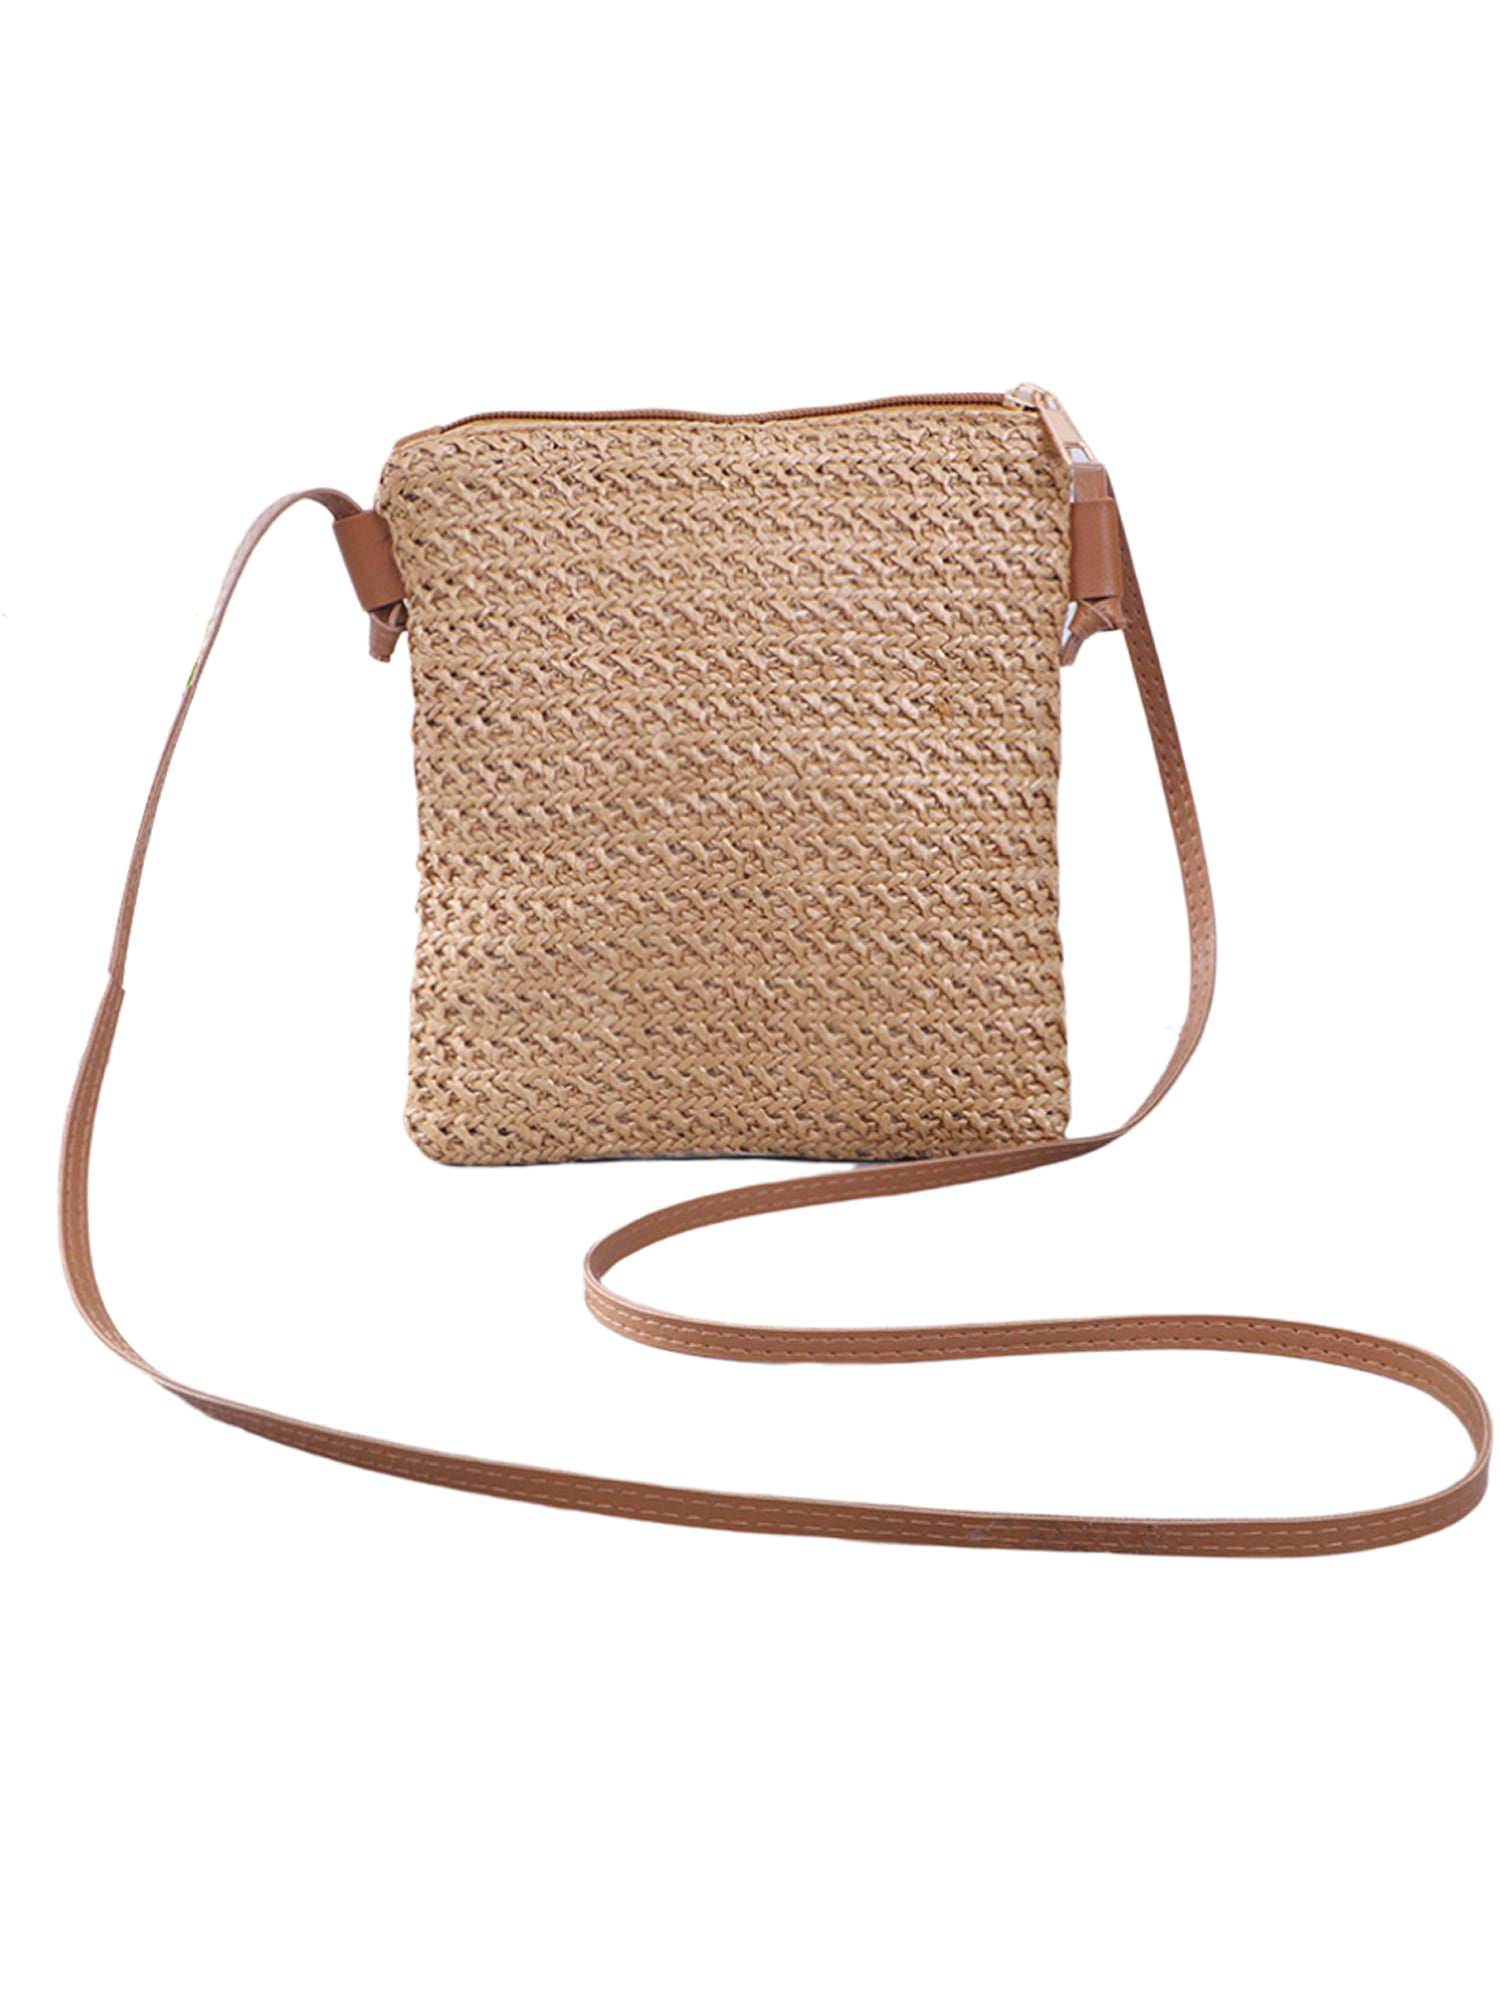 Solid Color Plaid Shoulder Handbags Women Small Round Tassel Crossbody Bags UK 